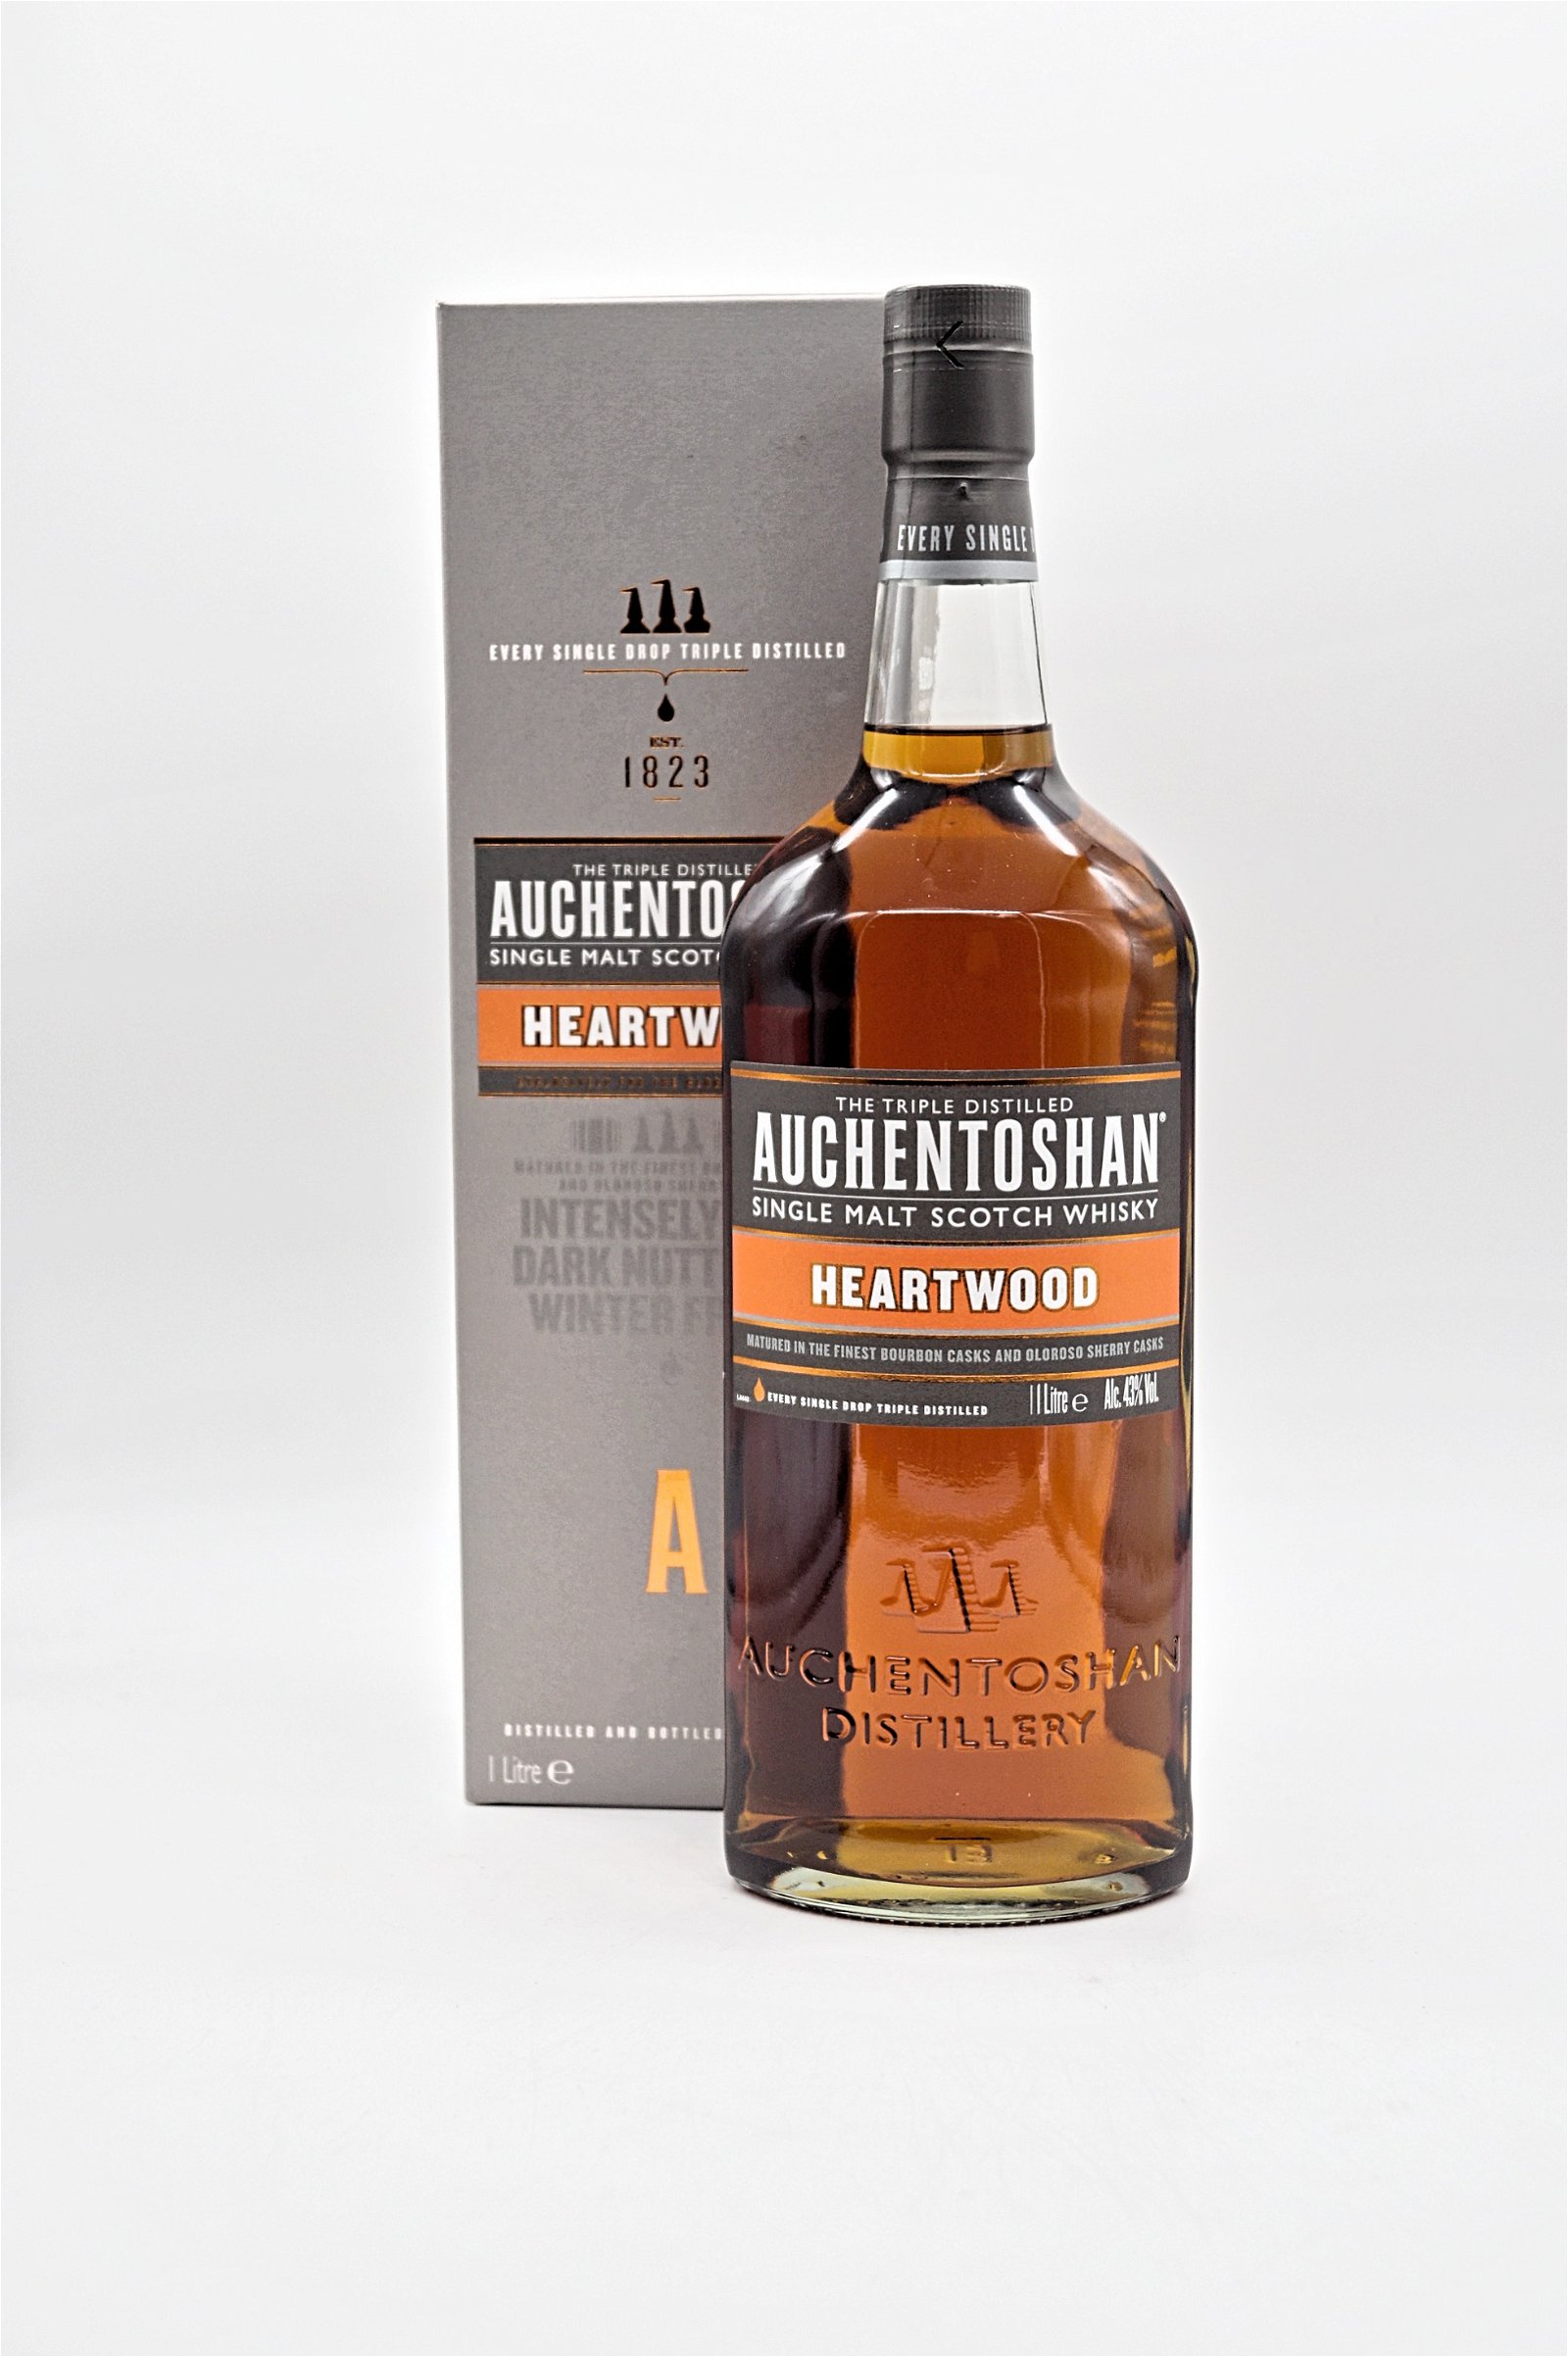 Auchentoshan Heartwood Single Malt Scotch Whisky